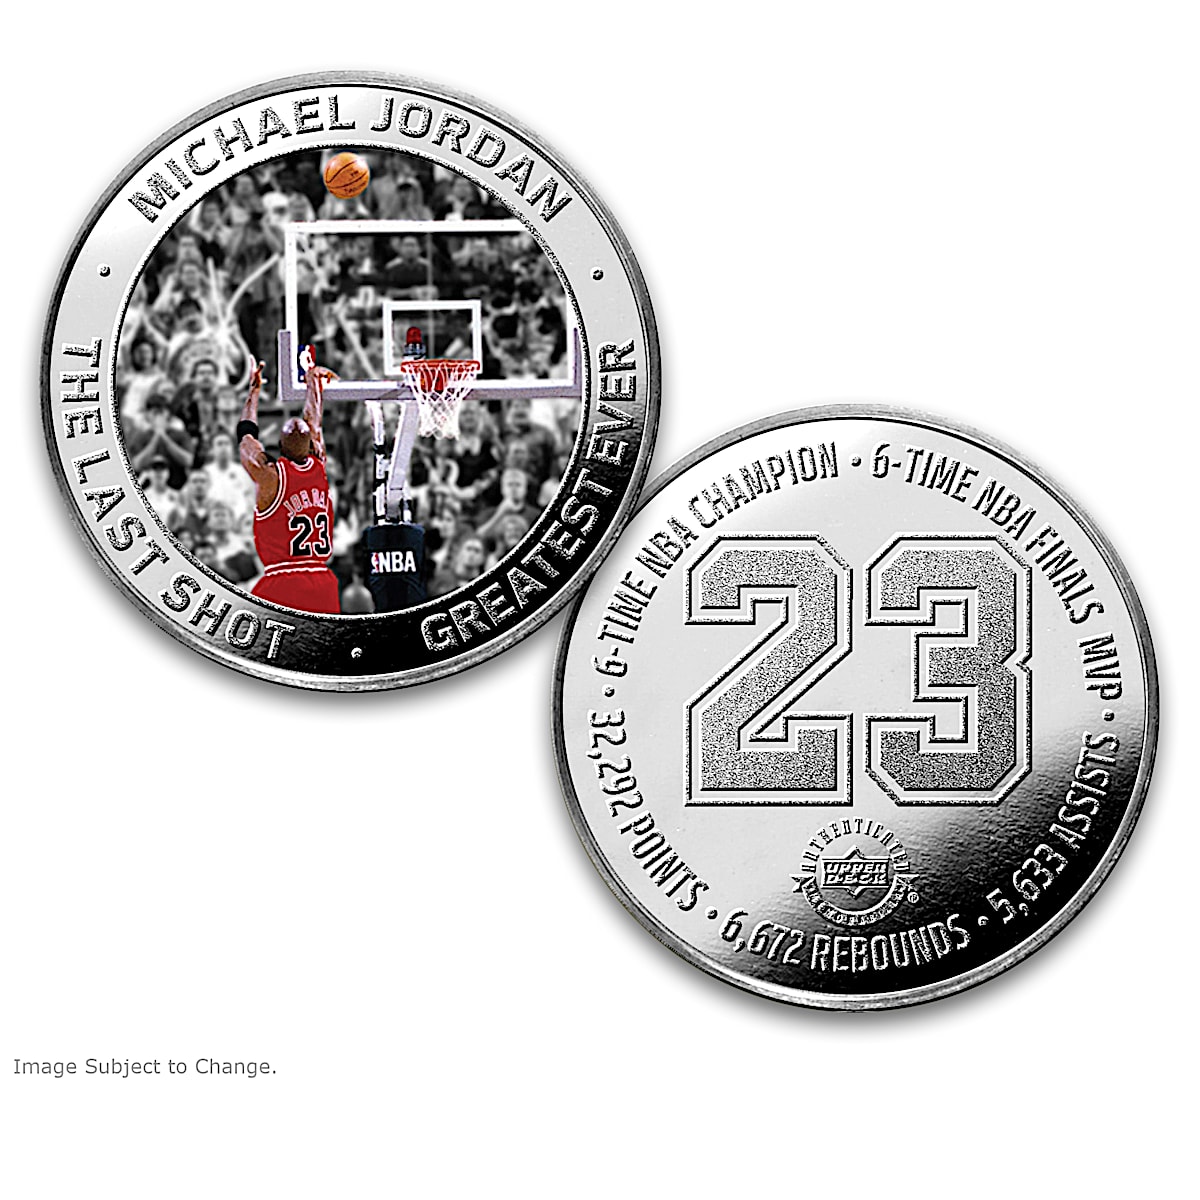 The Highland Mint | Michael Jordan Chicago Bulls The Last Shot 98 Finals Silver Coin Photo Mint